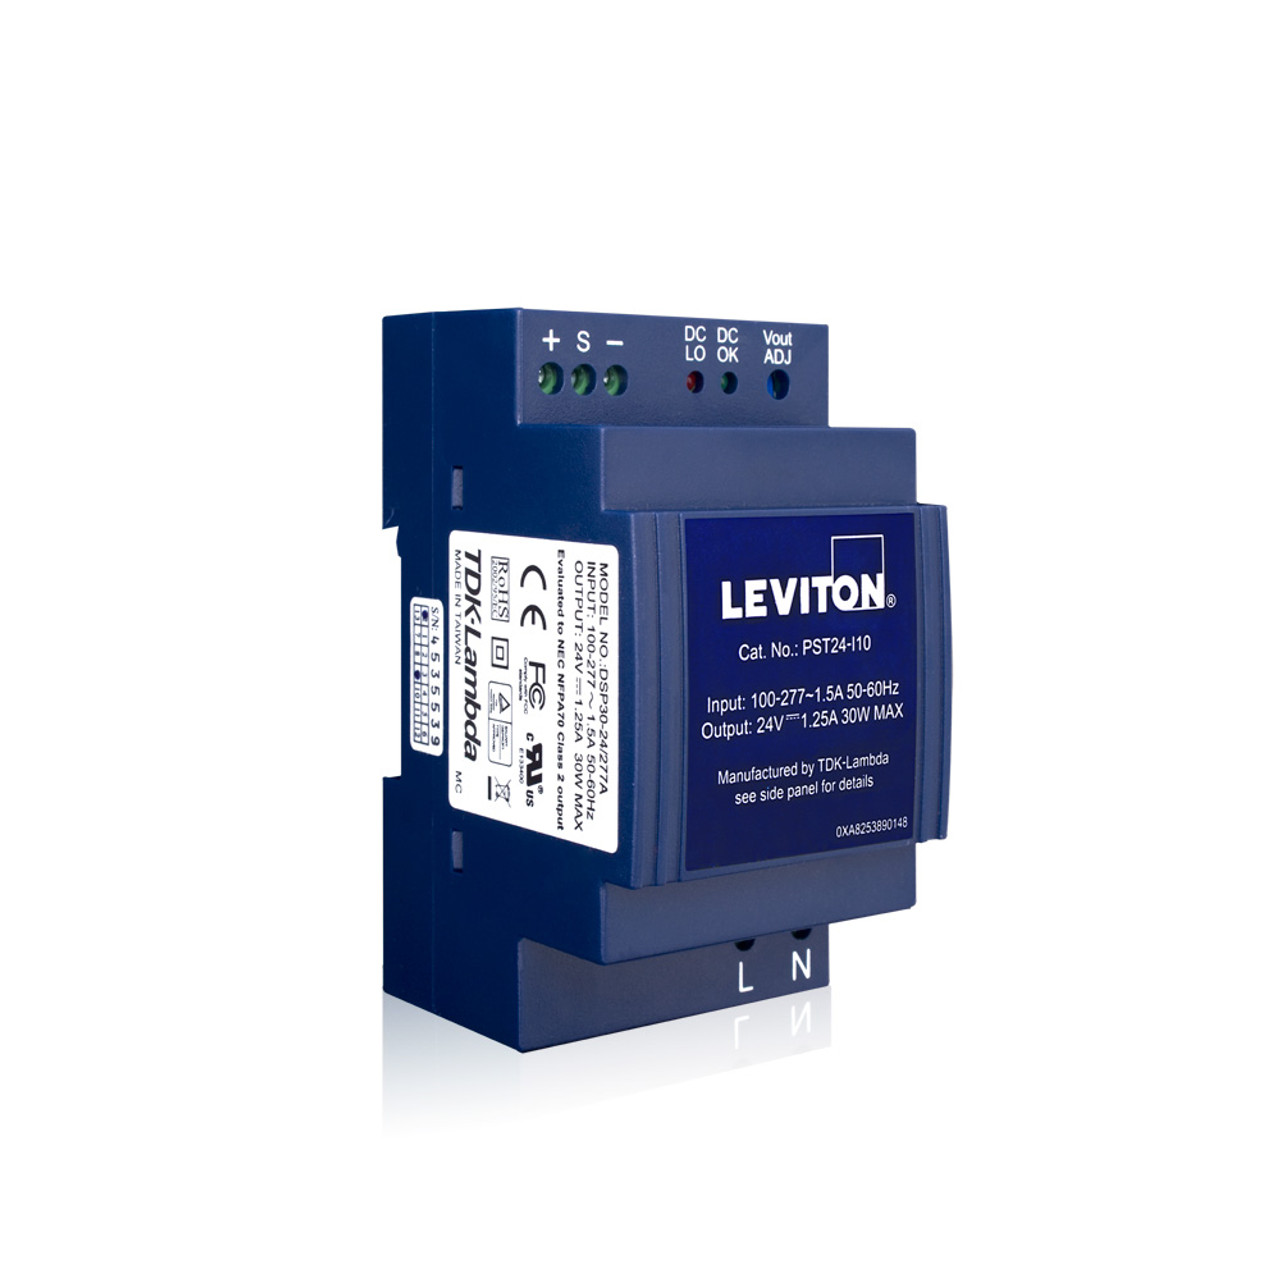 Leviton PST24-I10